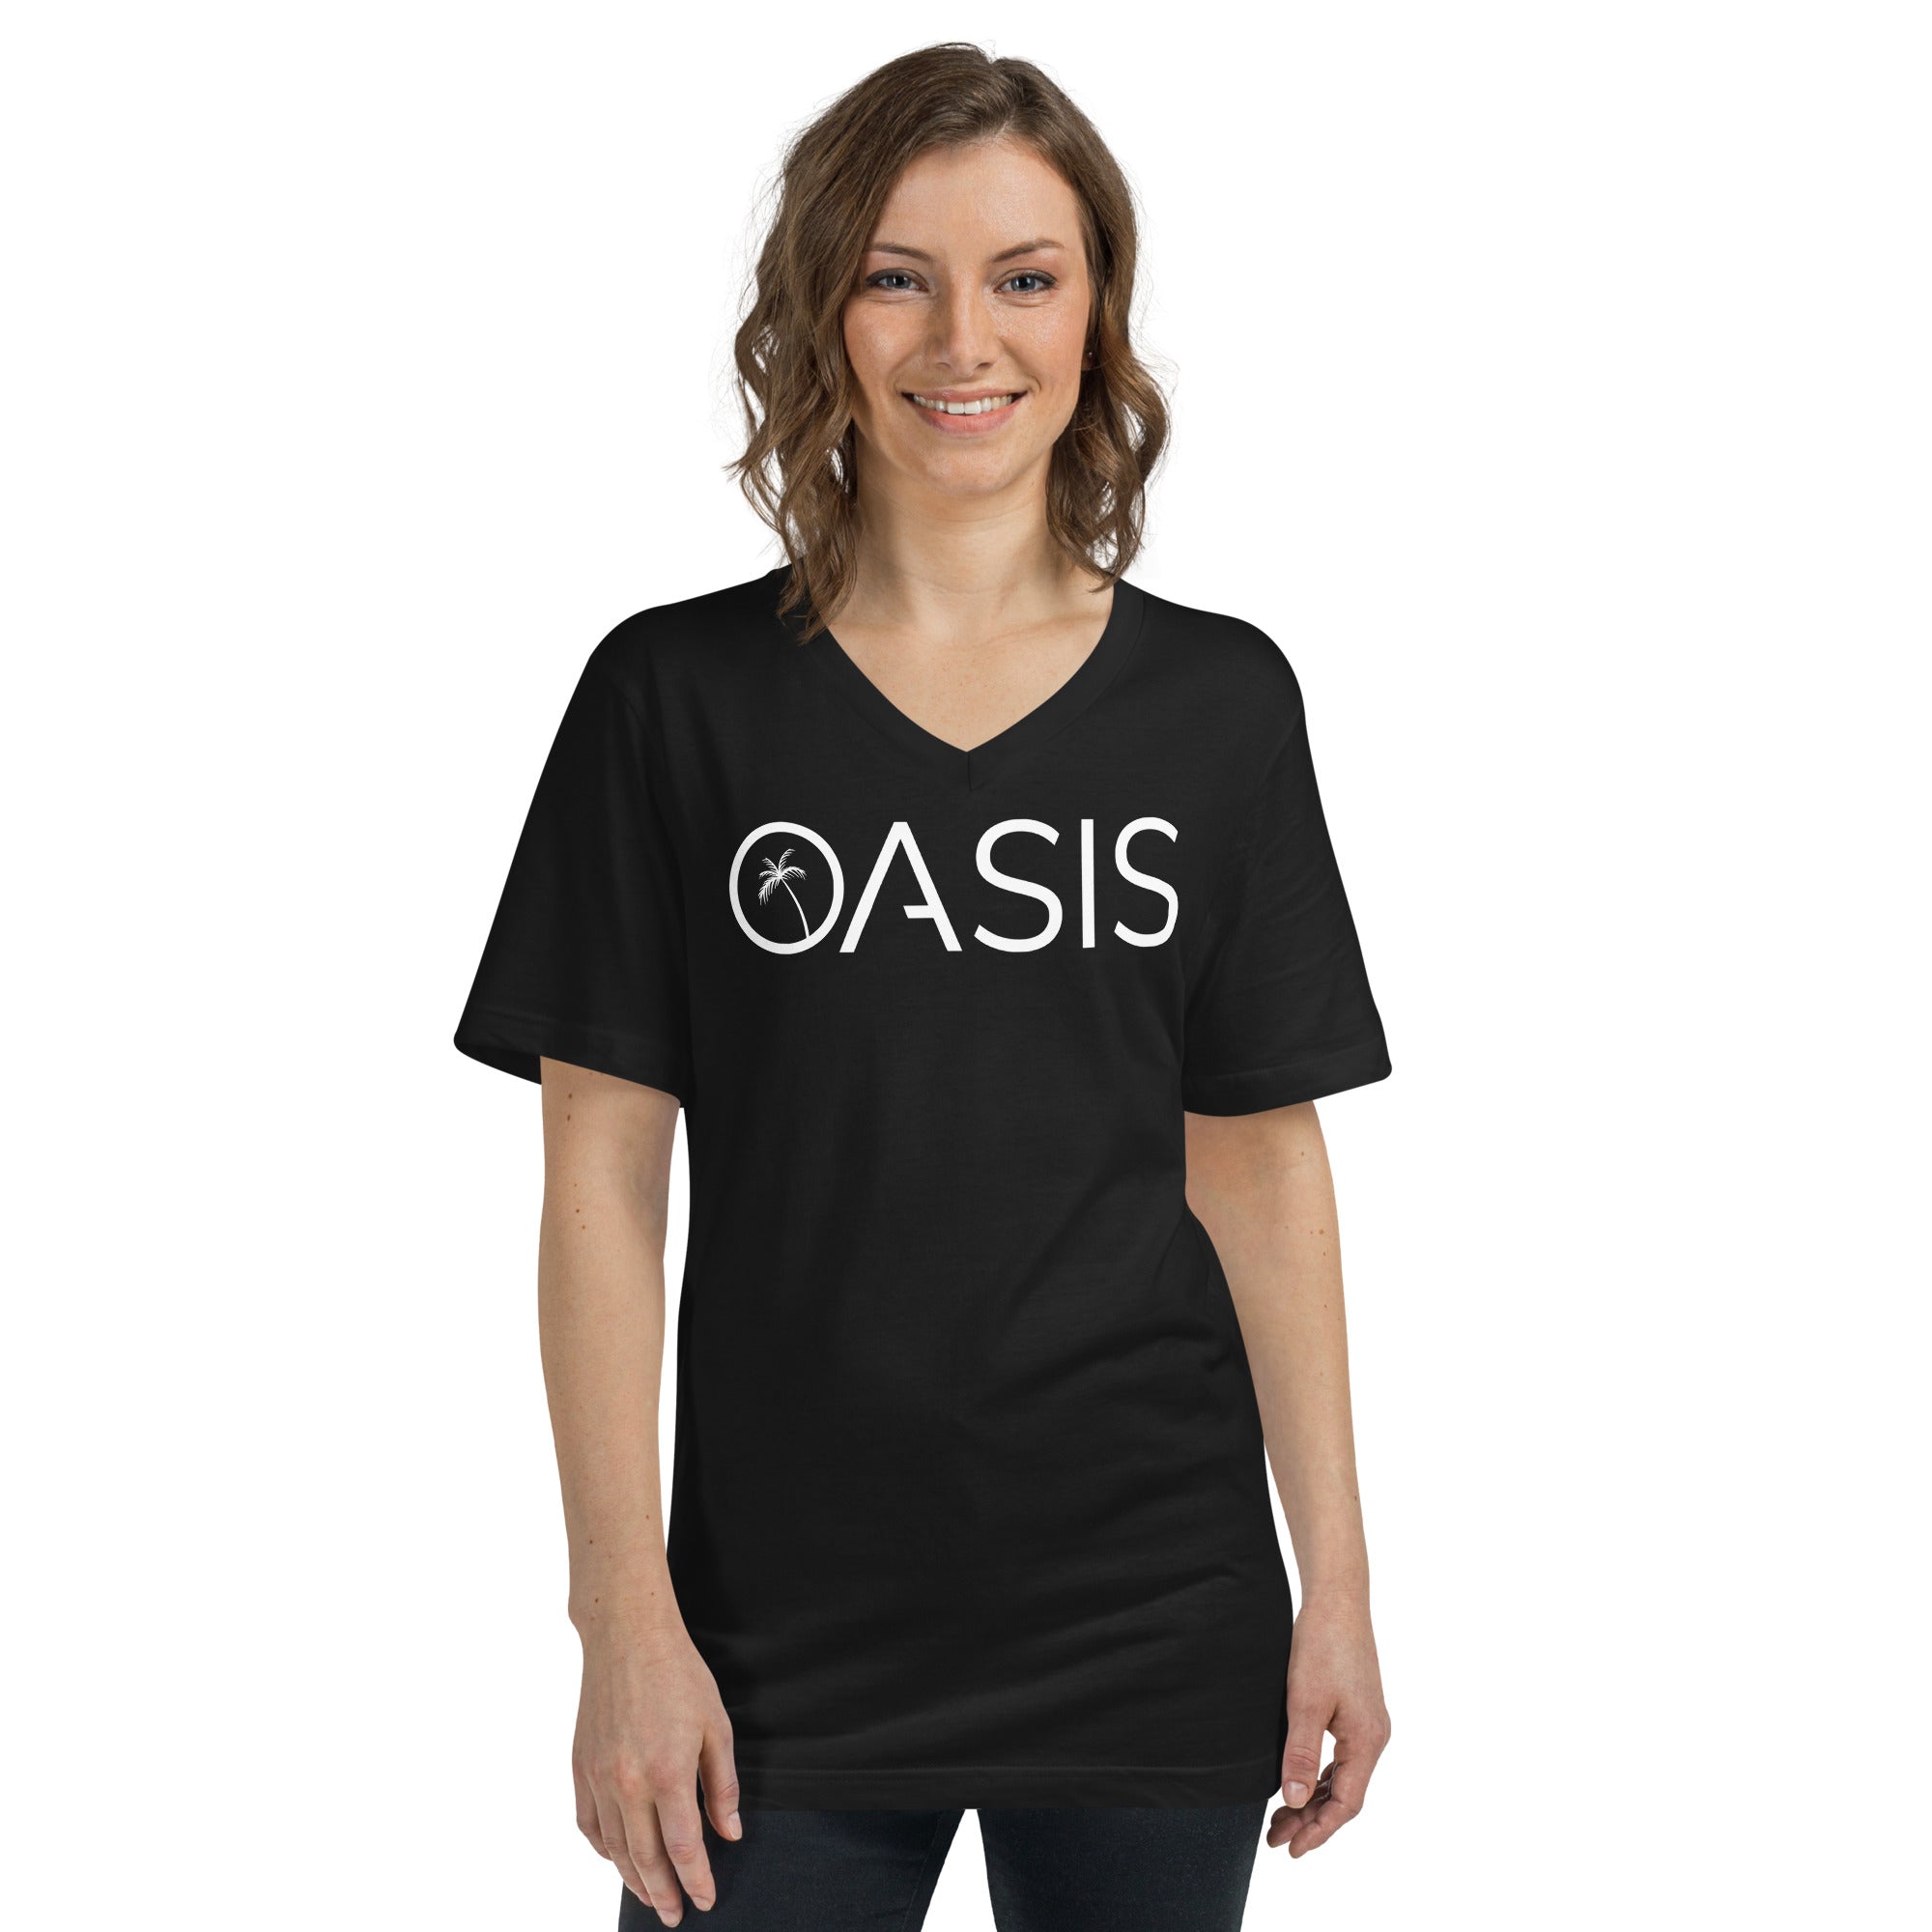 OASIS Unisex Short Sleeve V-Neck T-Shirt